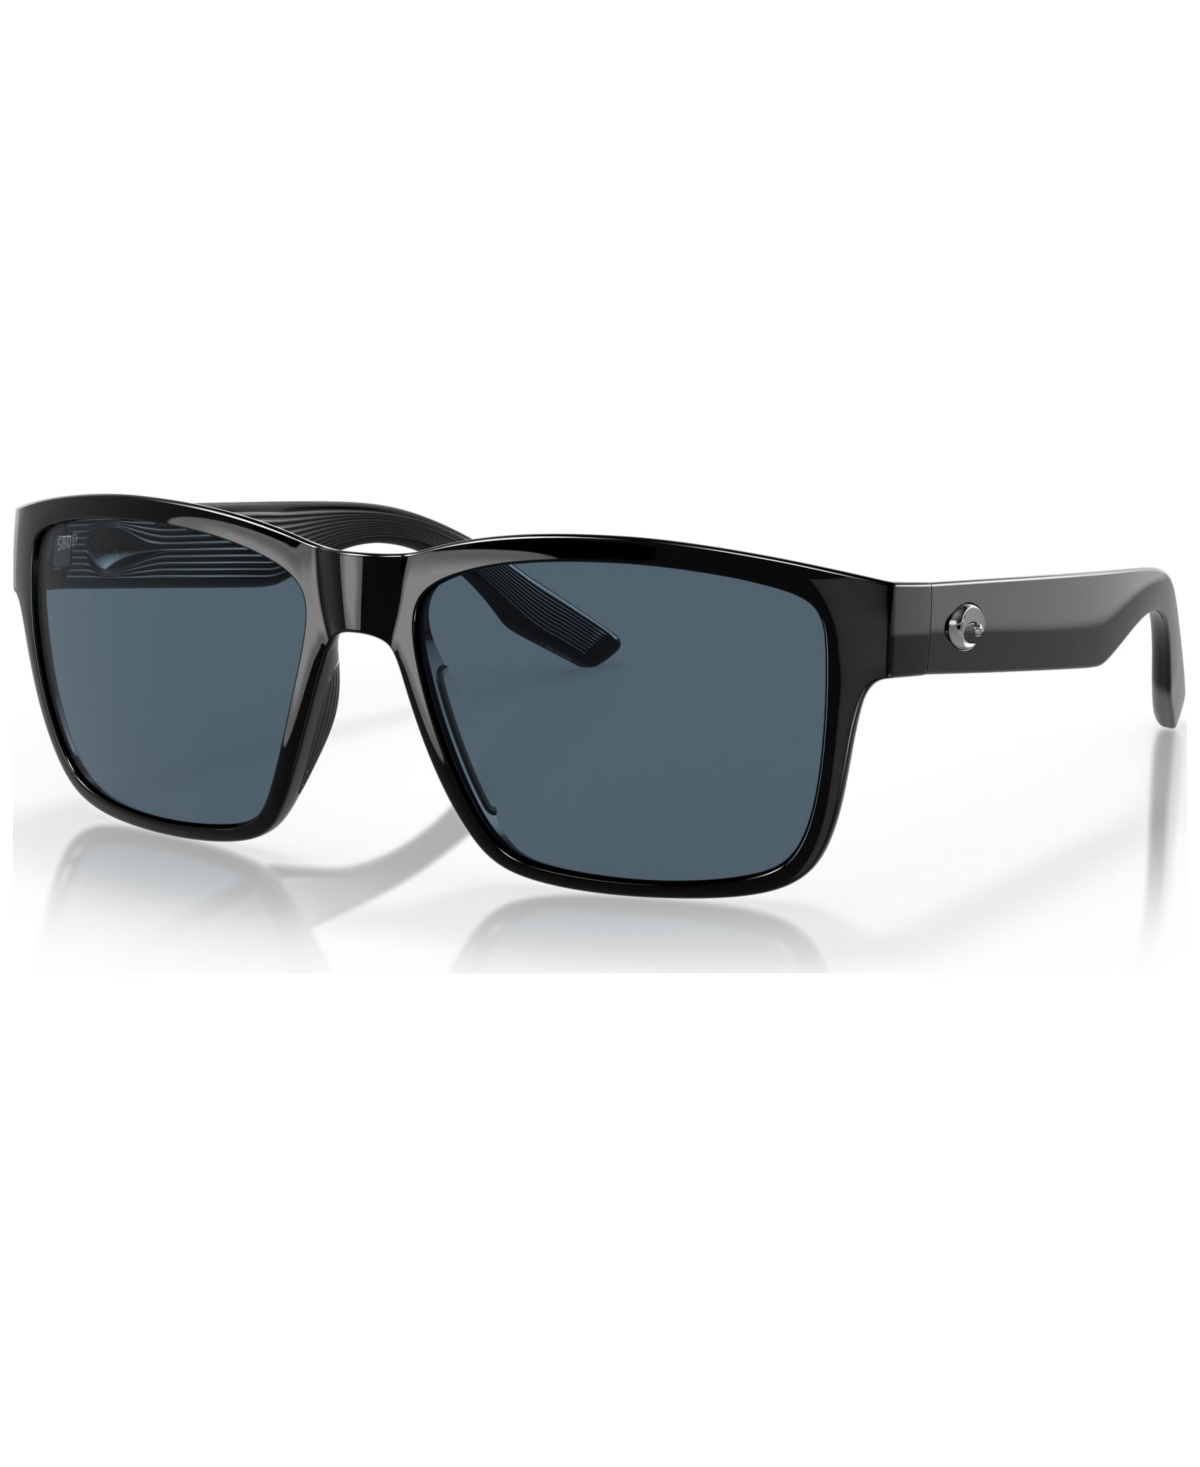 Costa Del Mar Paunch Grey Polarized Polycarbonate Mens Sunglasses 6s9049 904903 57 In Black / Grey